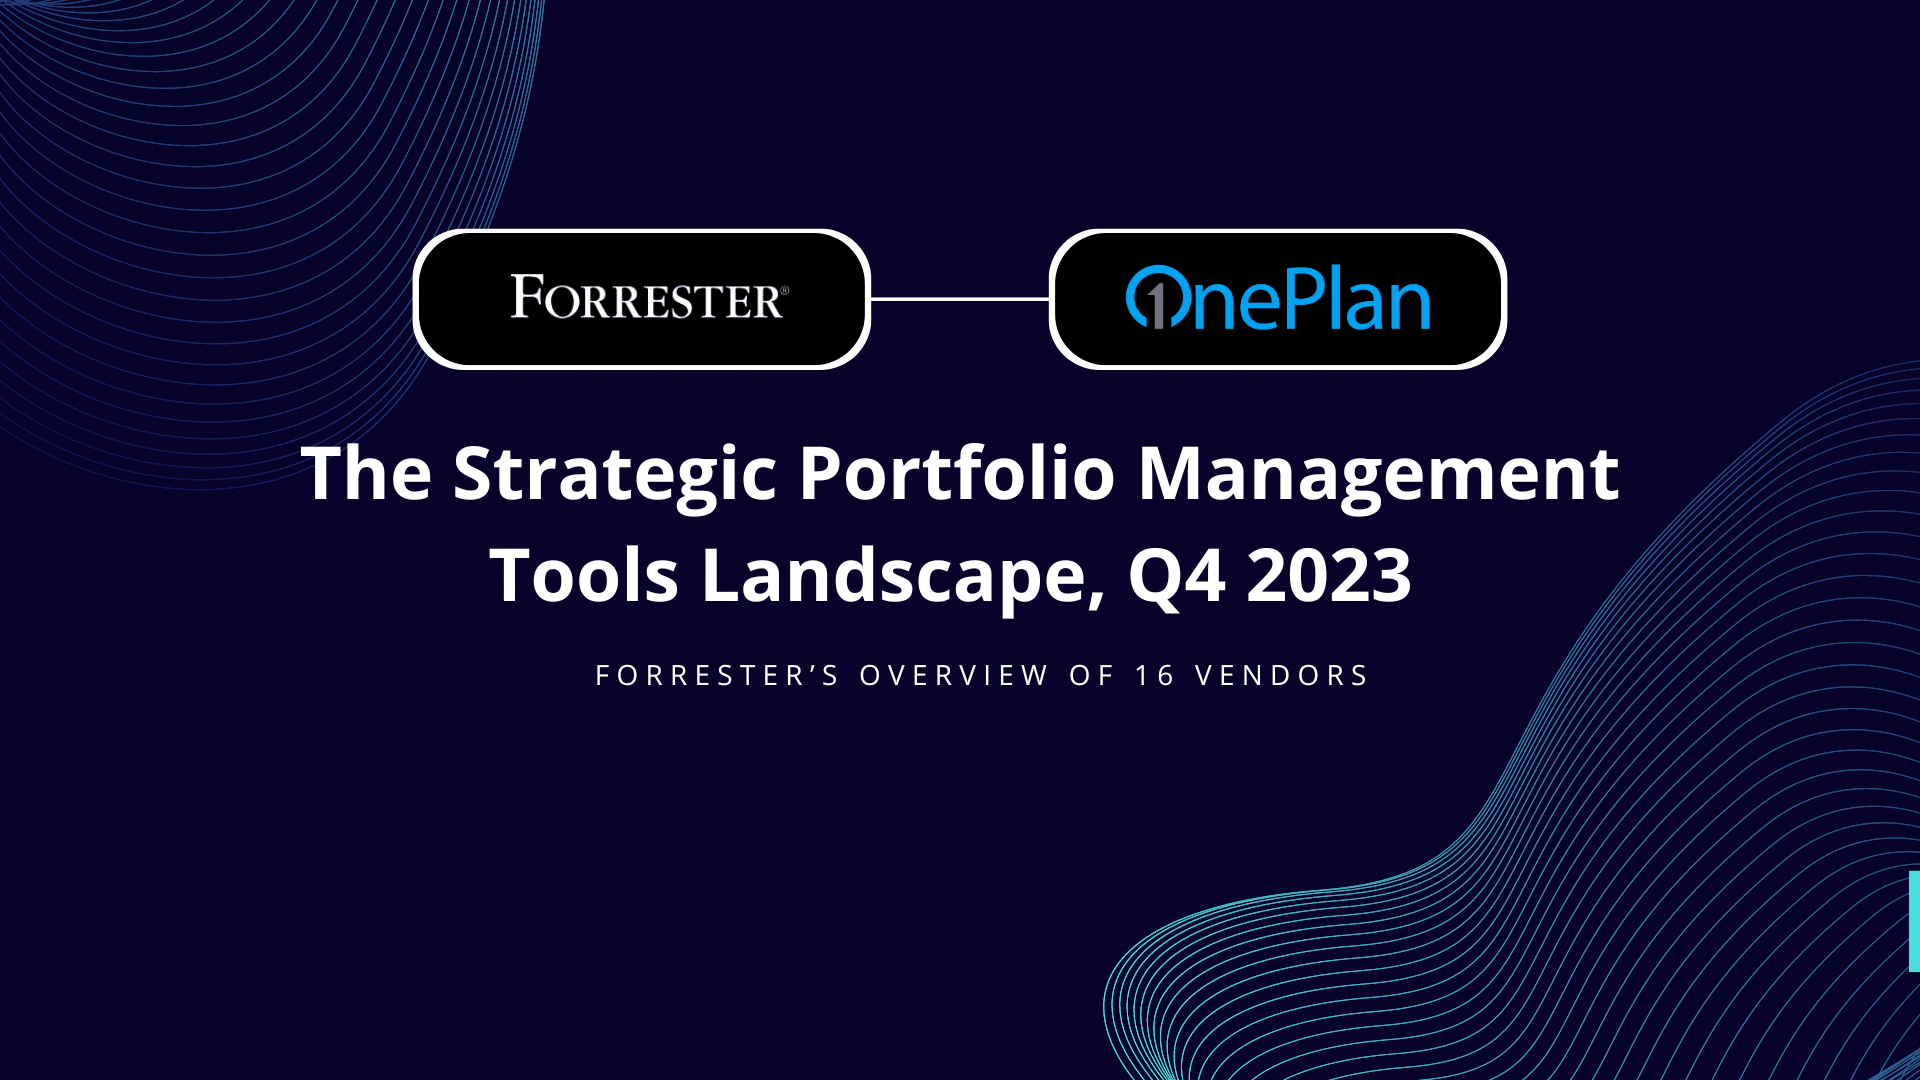 OnePlan Named Strong Performing in Forrester’s Strategic Portfolio Management Wave